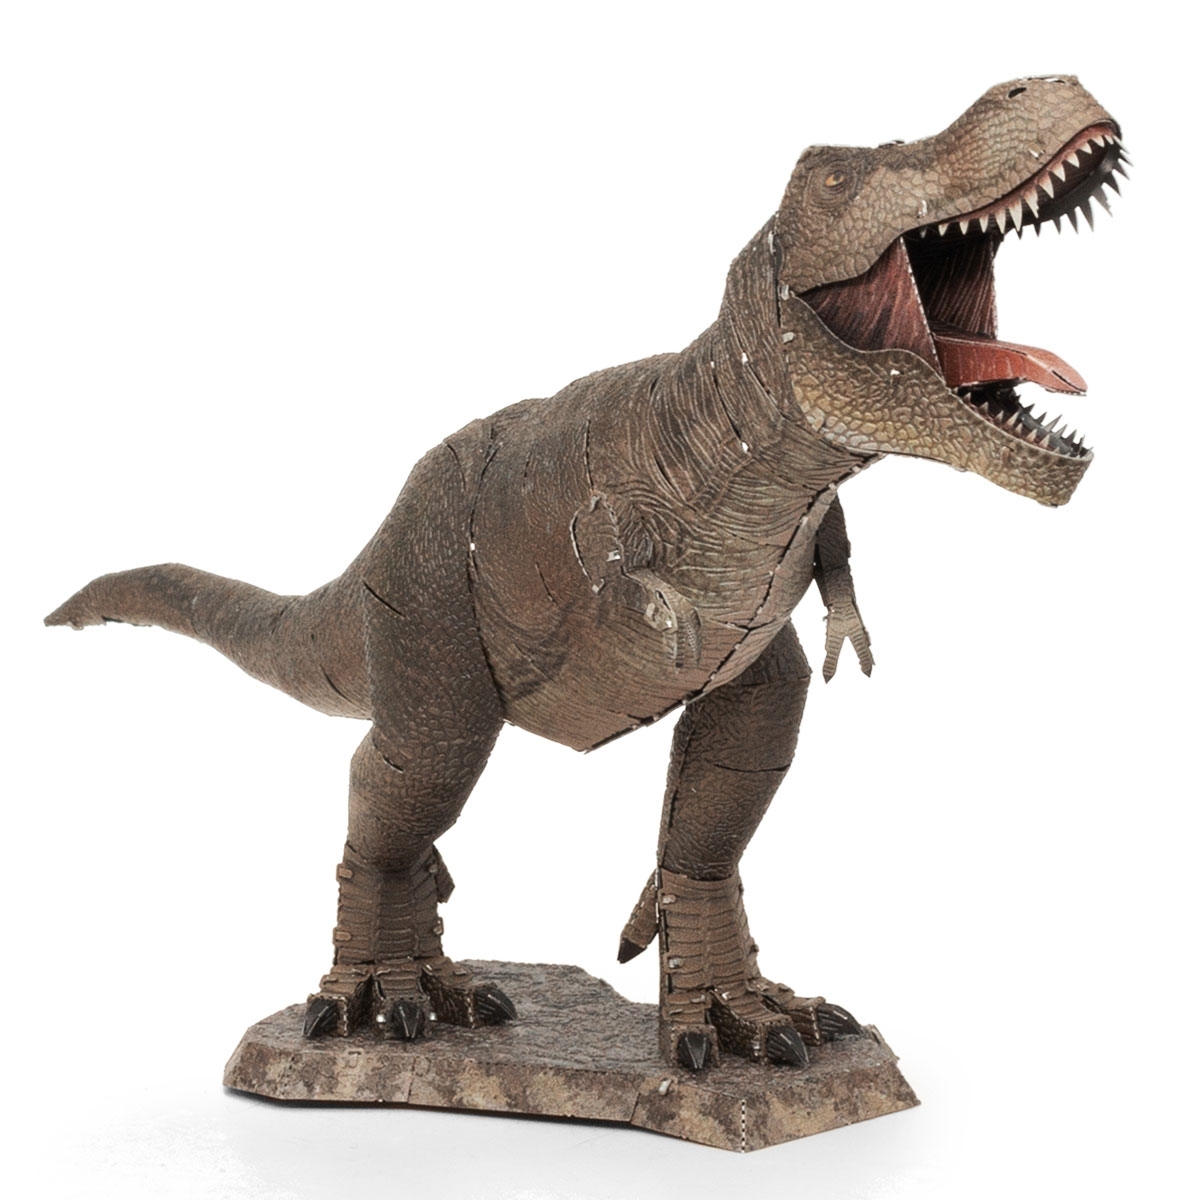 Stumpy arms and all - Metal Earth 3D Dinosaurs Tyrannosaurus Rex kit